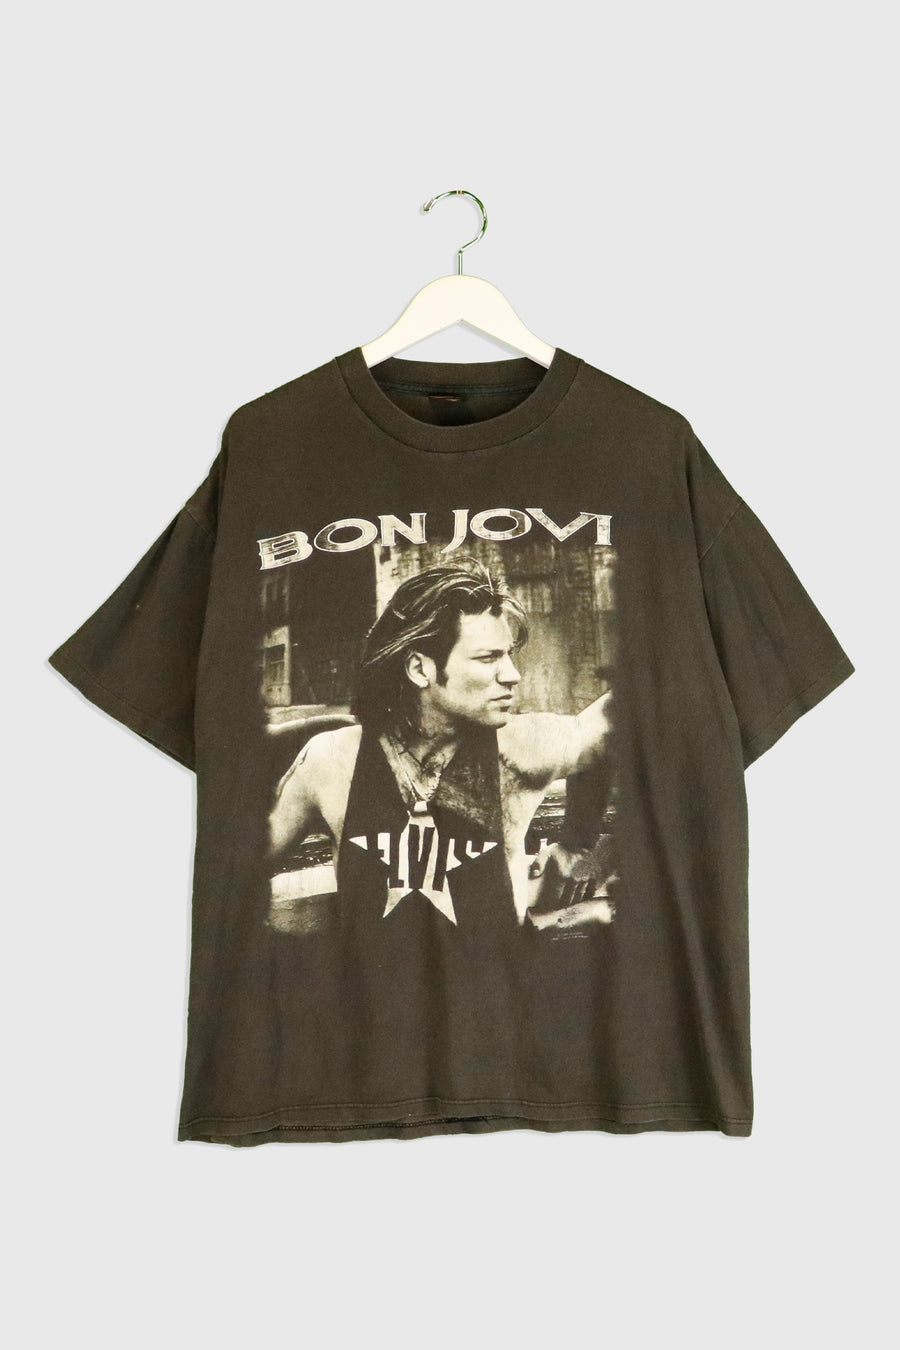 Vintage 1993 Bon Jovi I Believe Tour T Shirt Sz XL